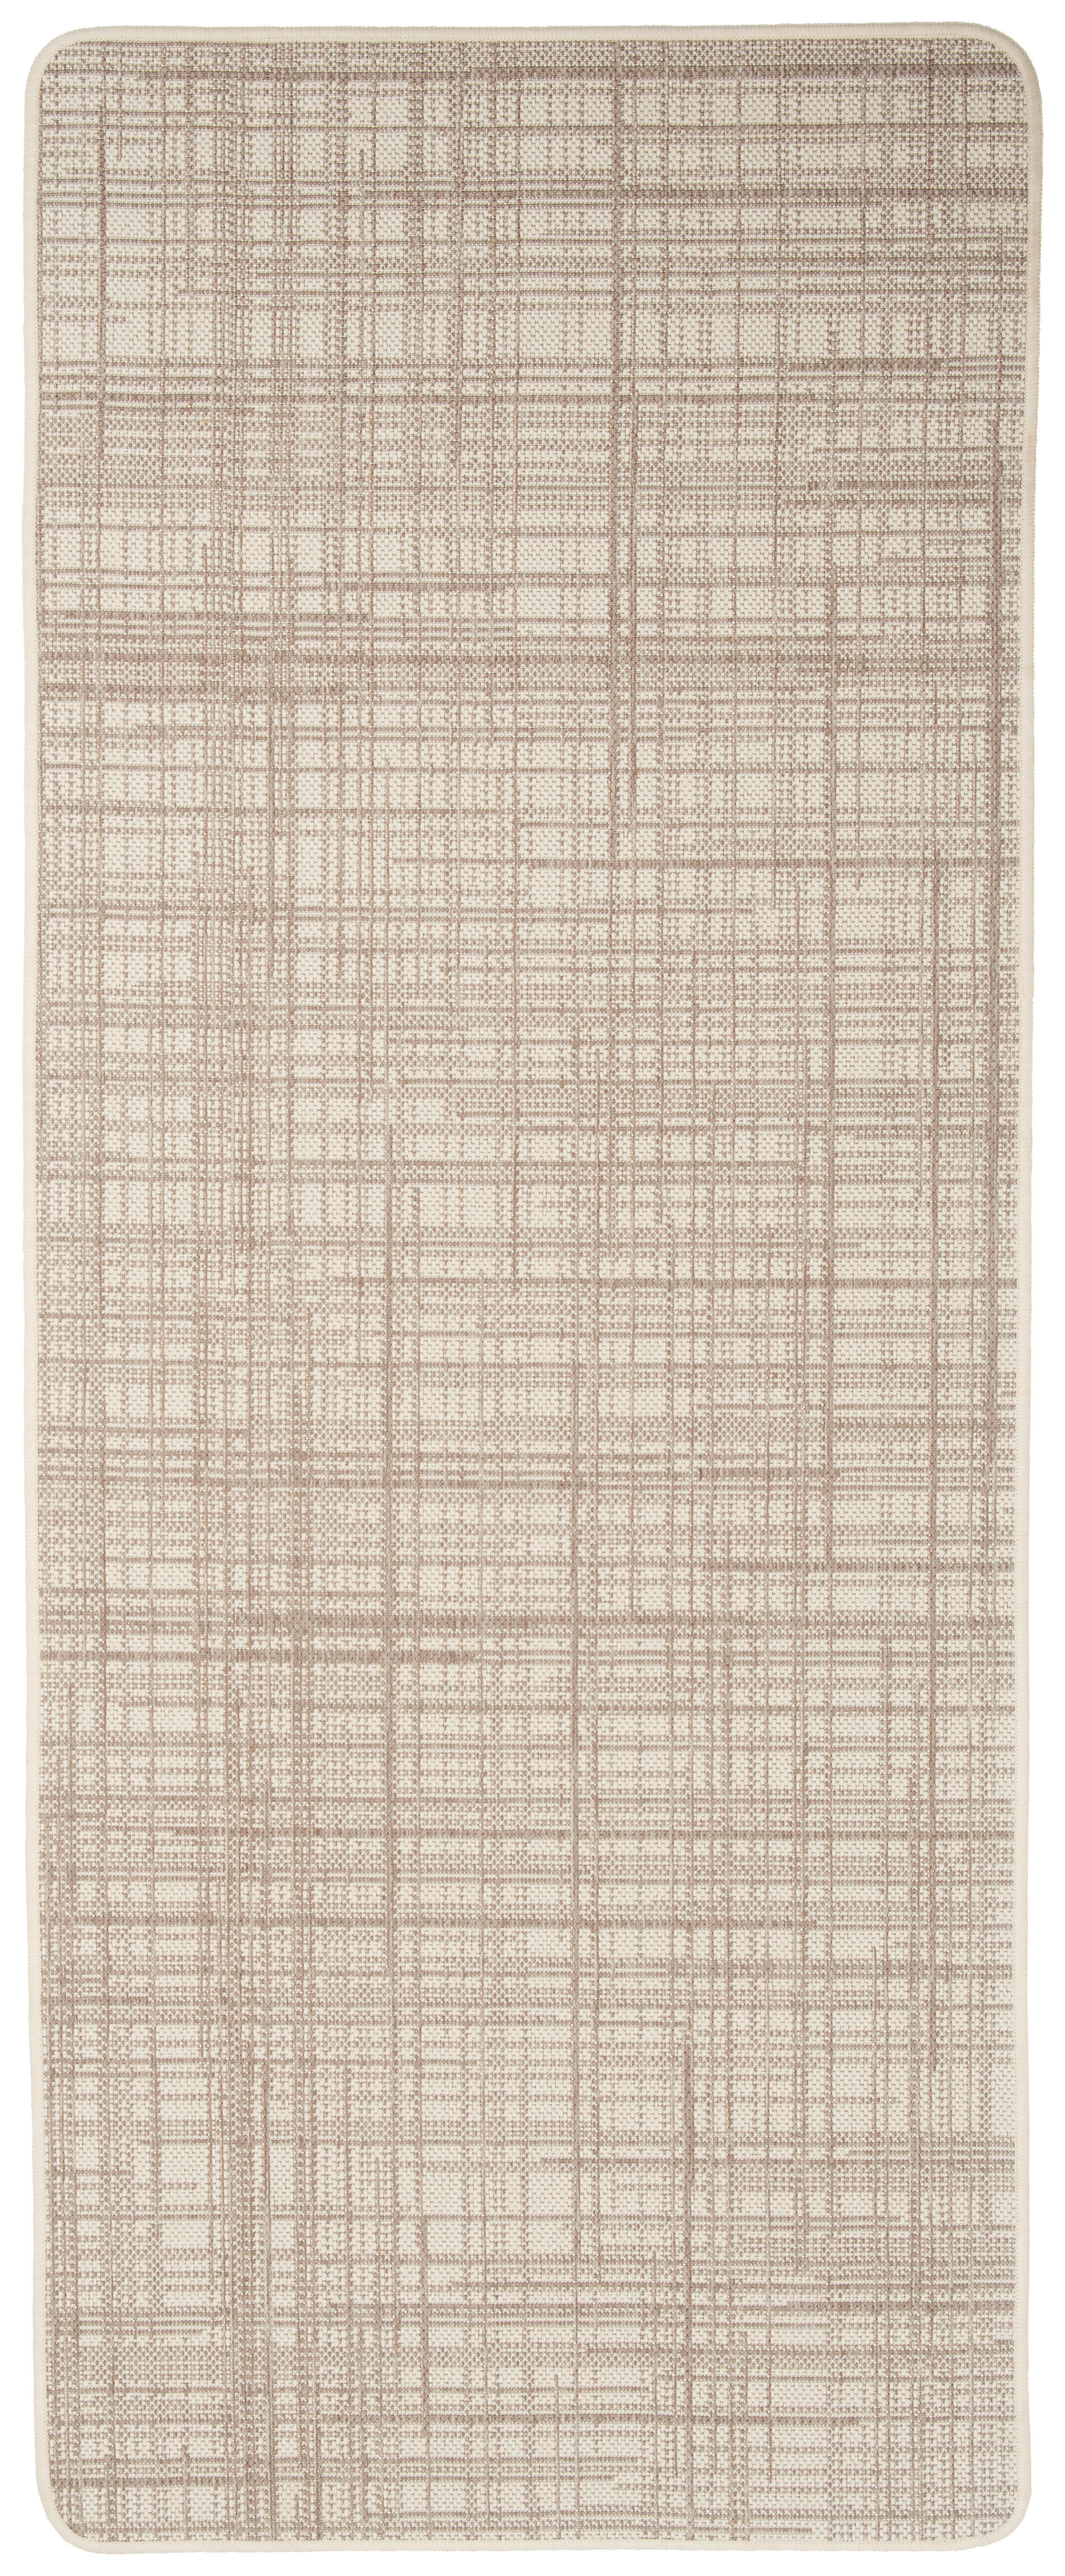 KÖKSMATTA 67/200 cm  - beige, Klassisk, textil (67/200cm) - Boxxx